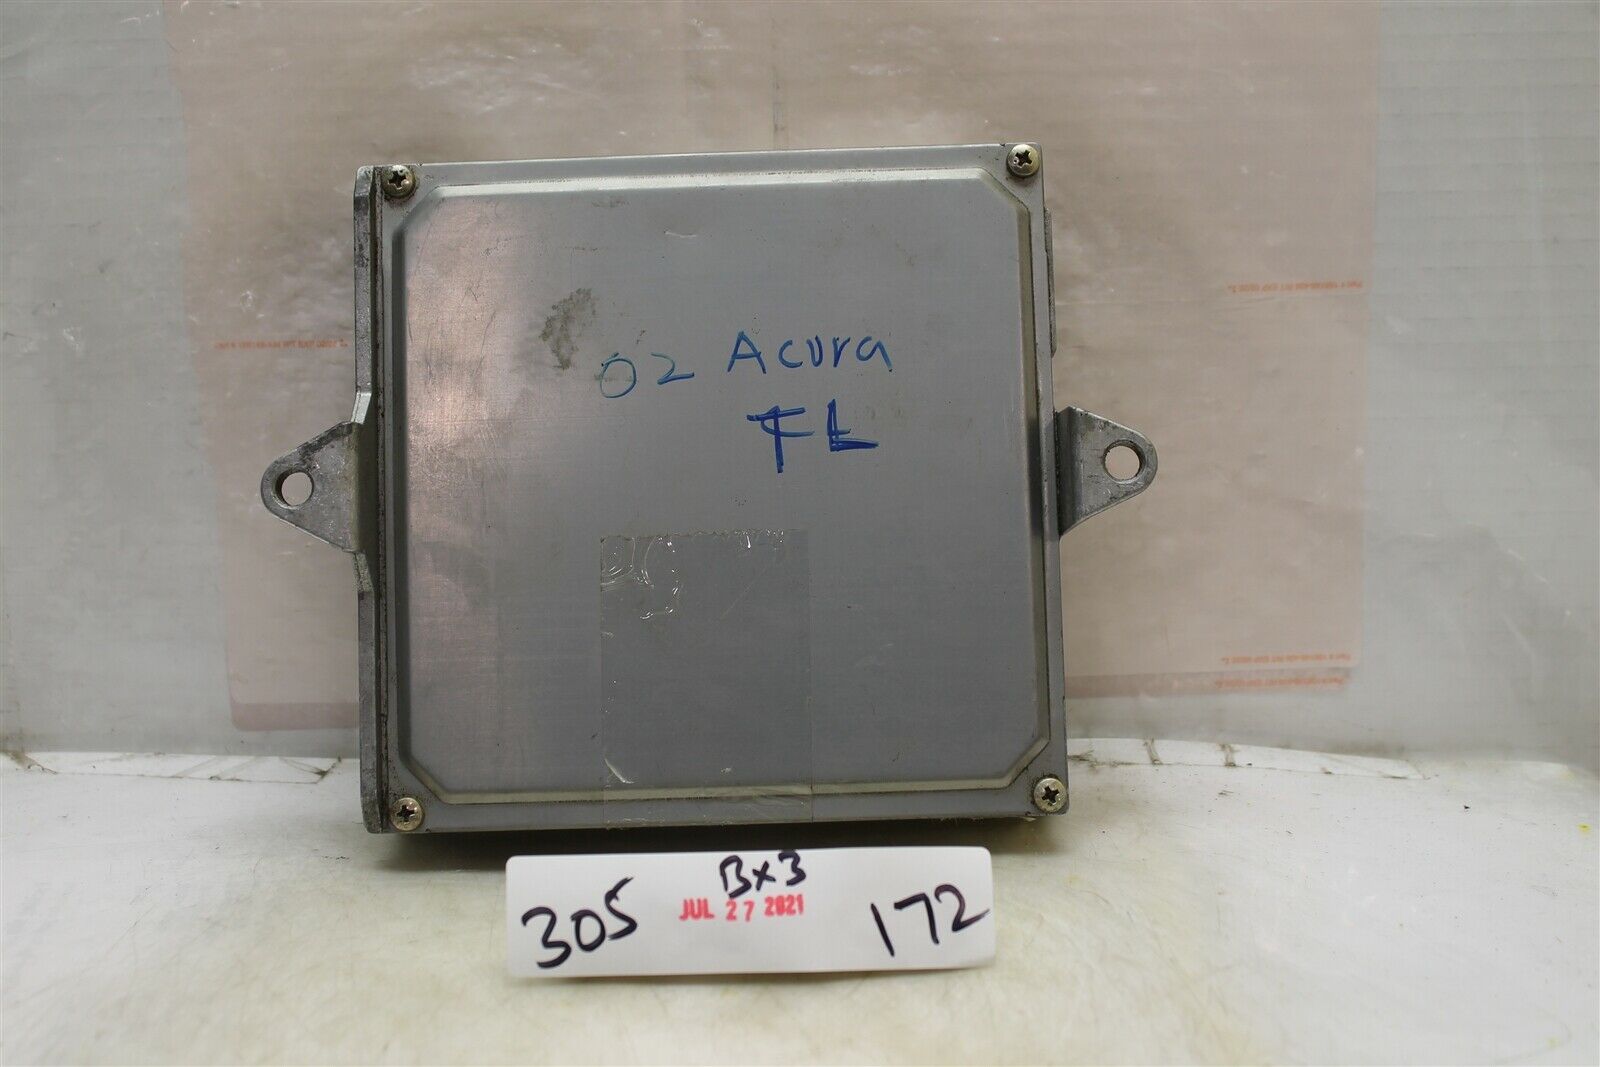 Primary image for 2002-2003 Acura TL 3.2L Engine Control Unit ECU 37820PJEA64 Module 172 3o5-B3